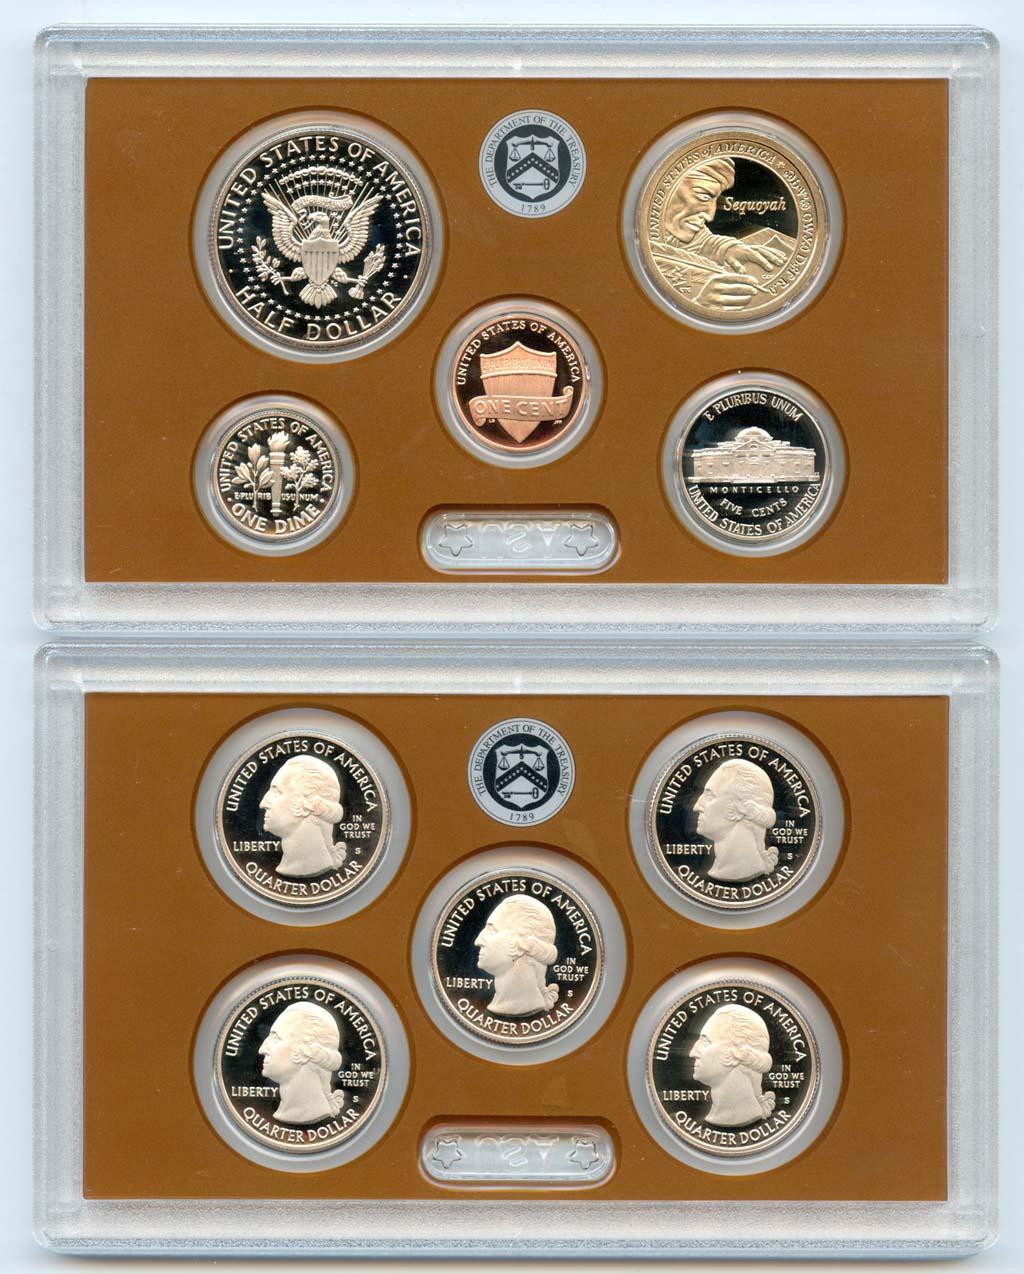 2017 PROOF SET * ORIGINAL * 10 Coin U.S. Mint Proof Set